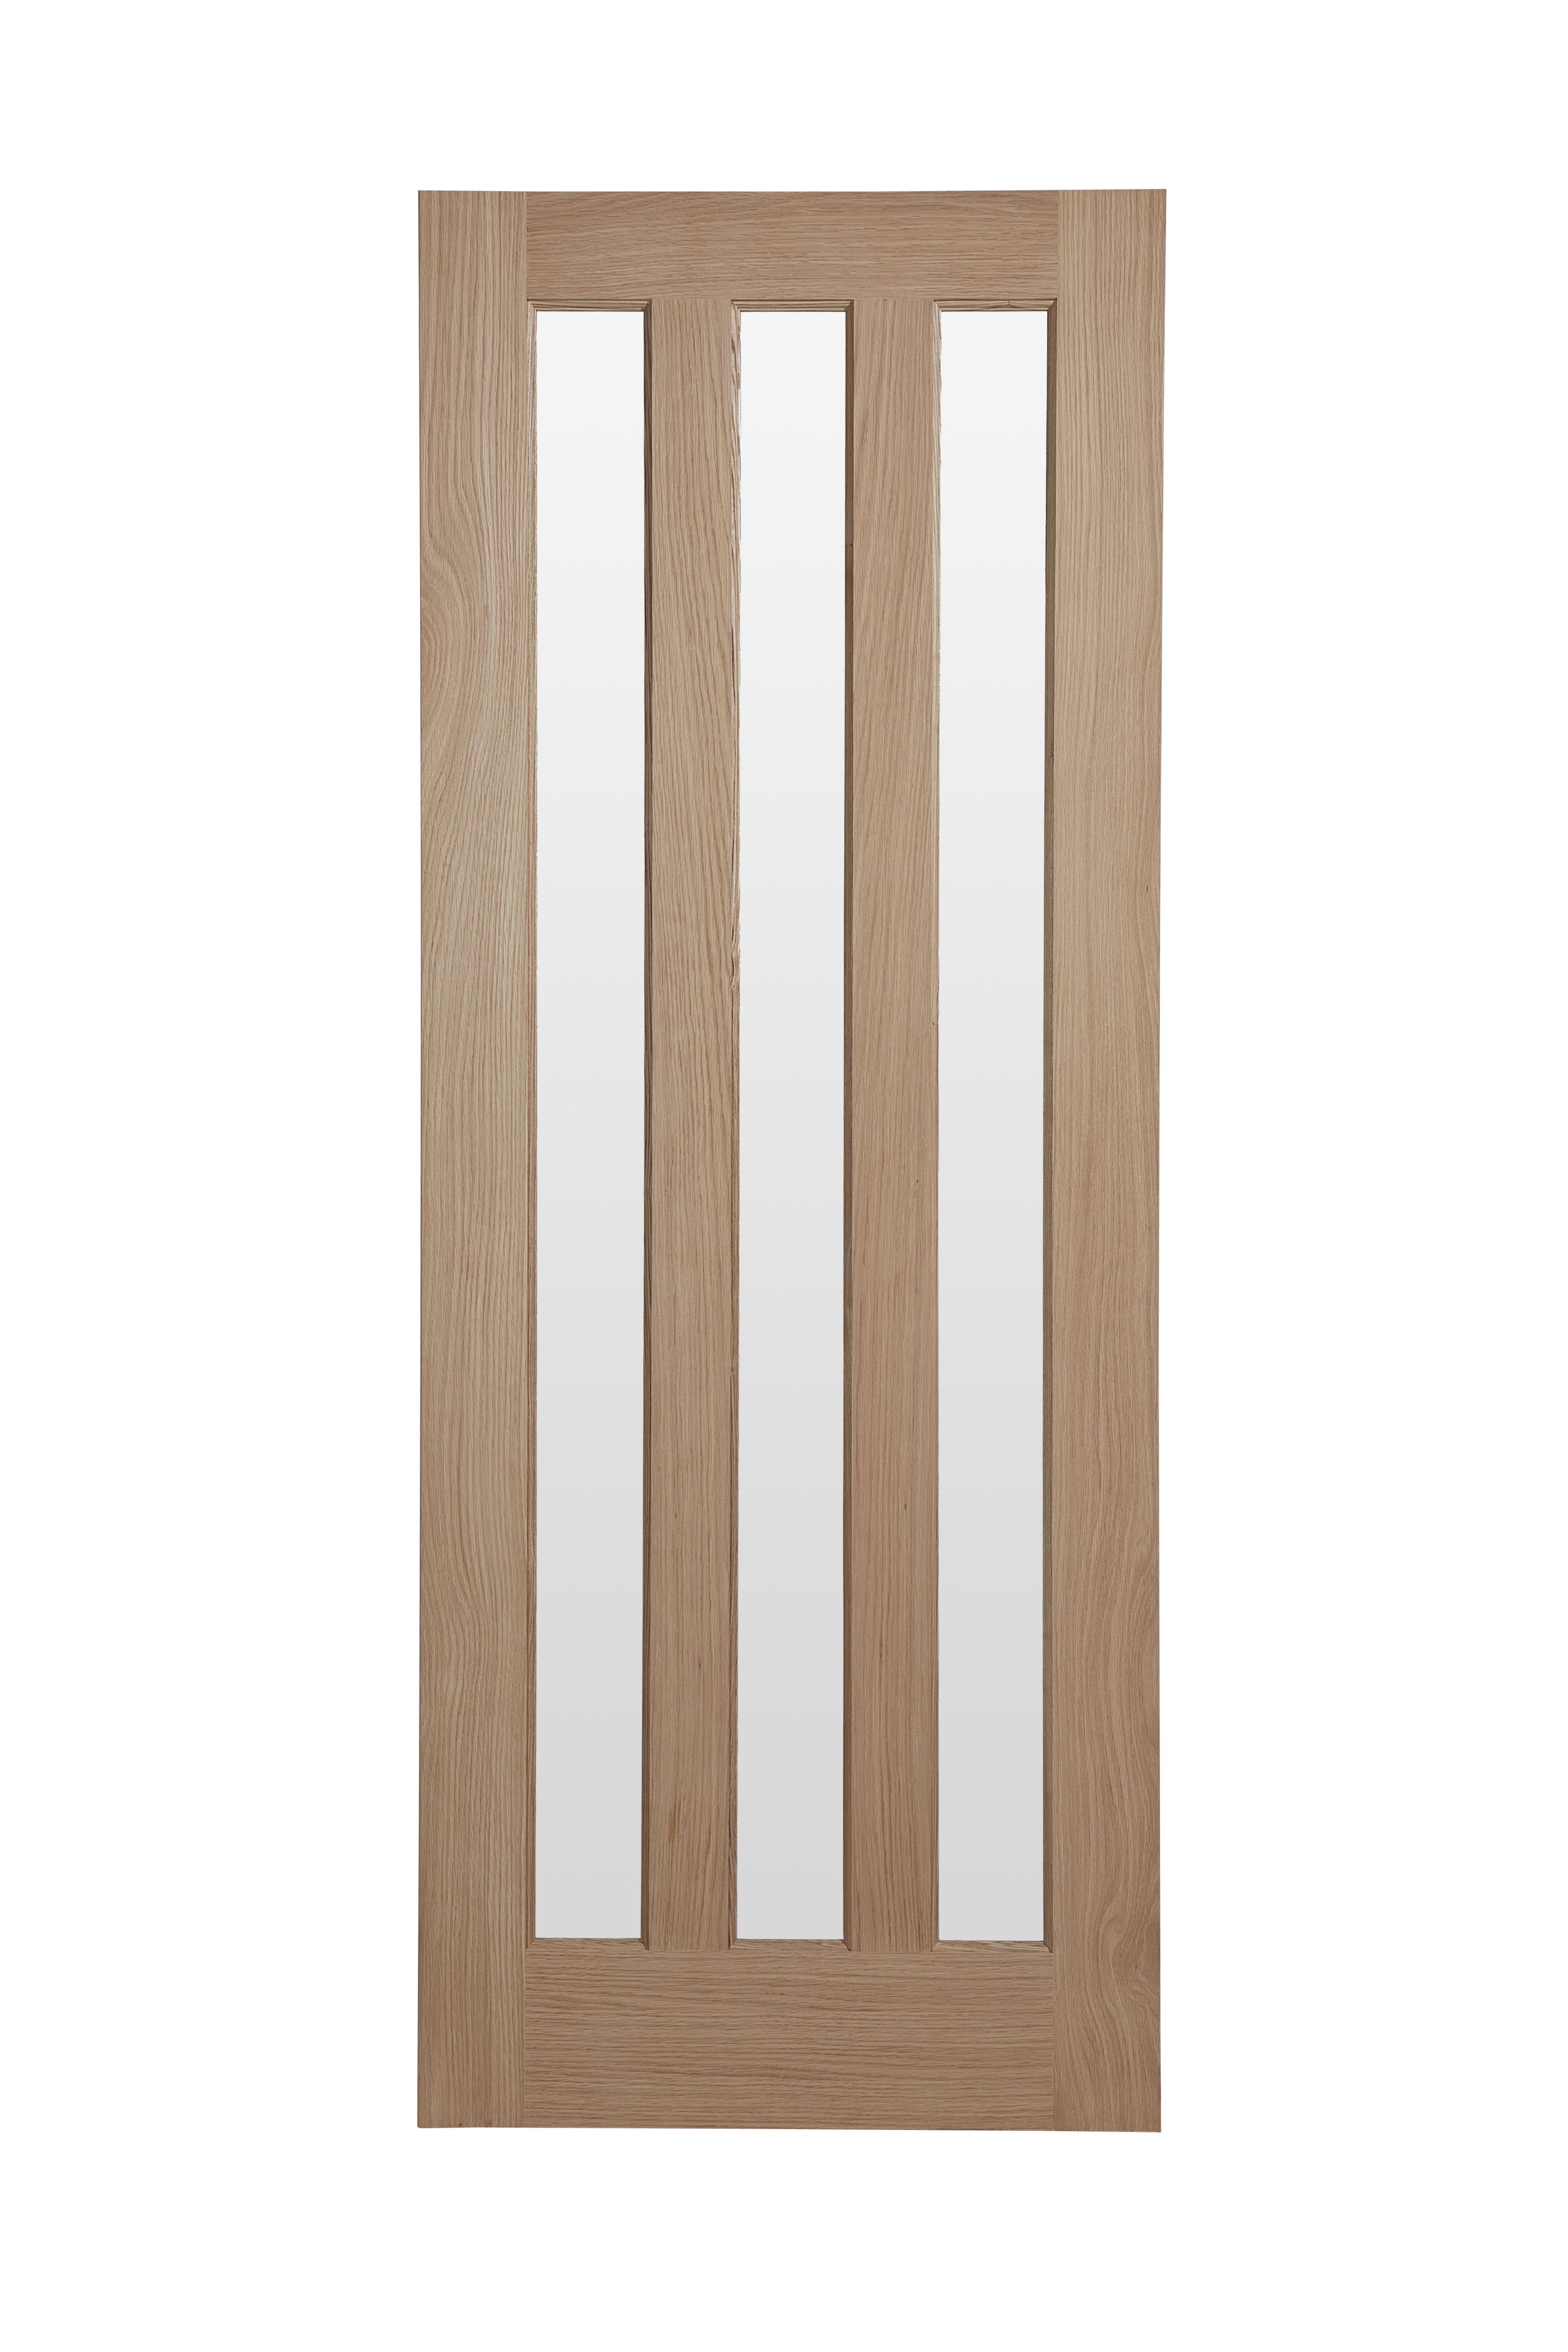 Vertical, 3 Lite 3 panel Frosted Glazed Oak veneer Internal Door, (H)1981mm (W)686mm (T)35mm